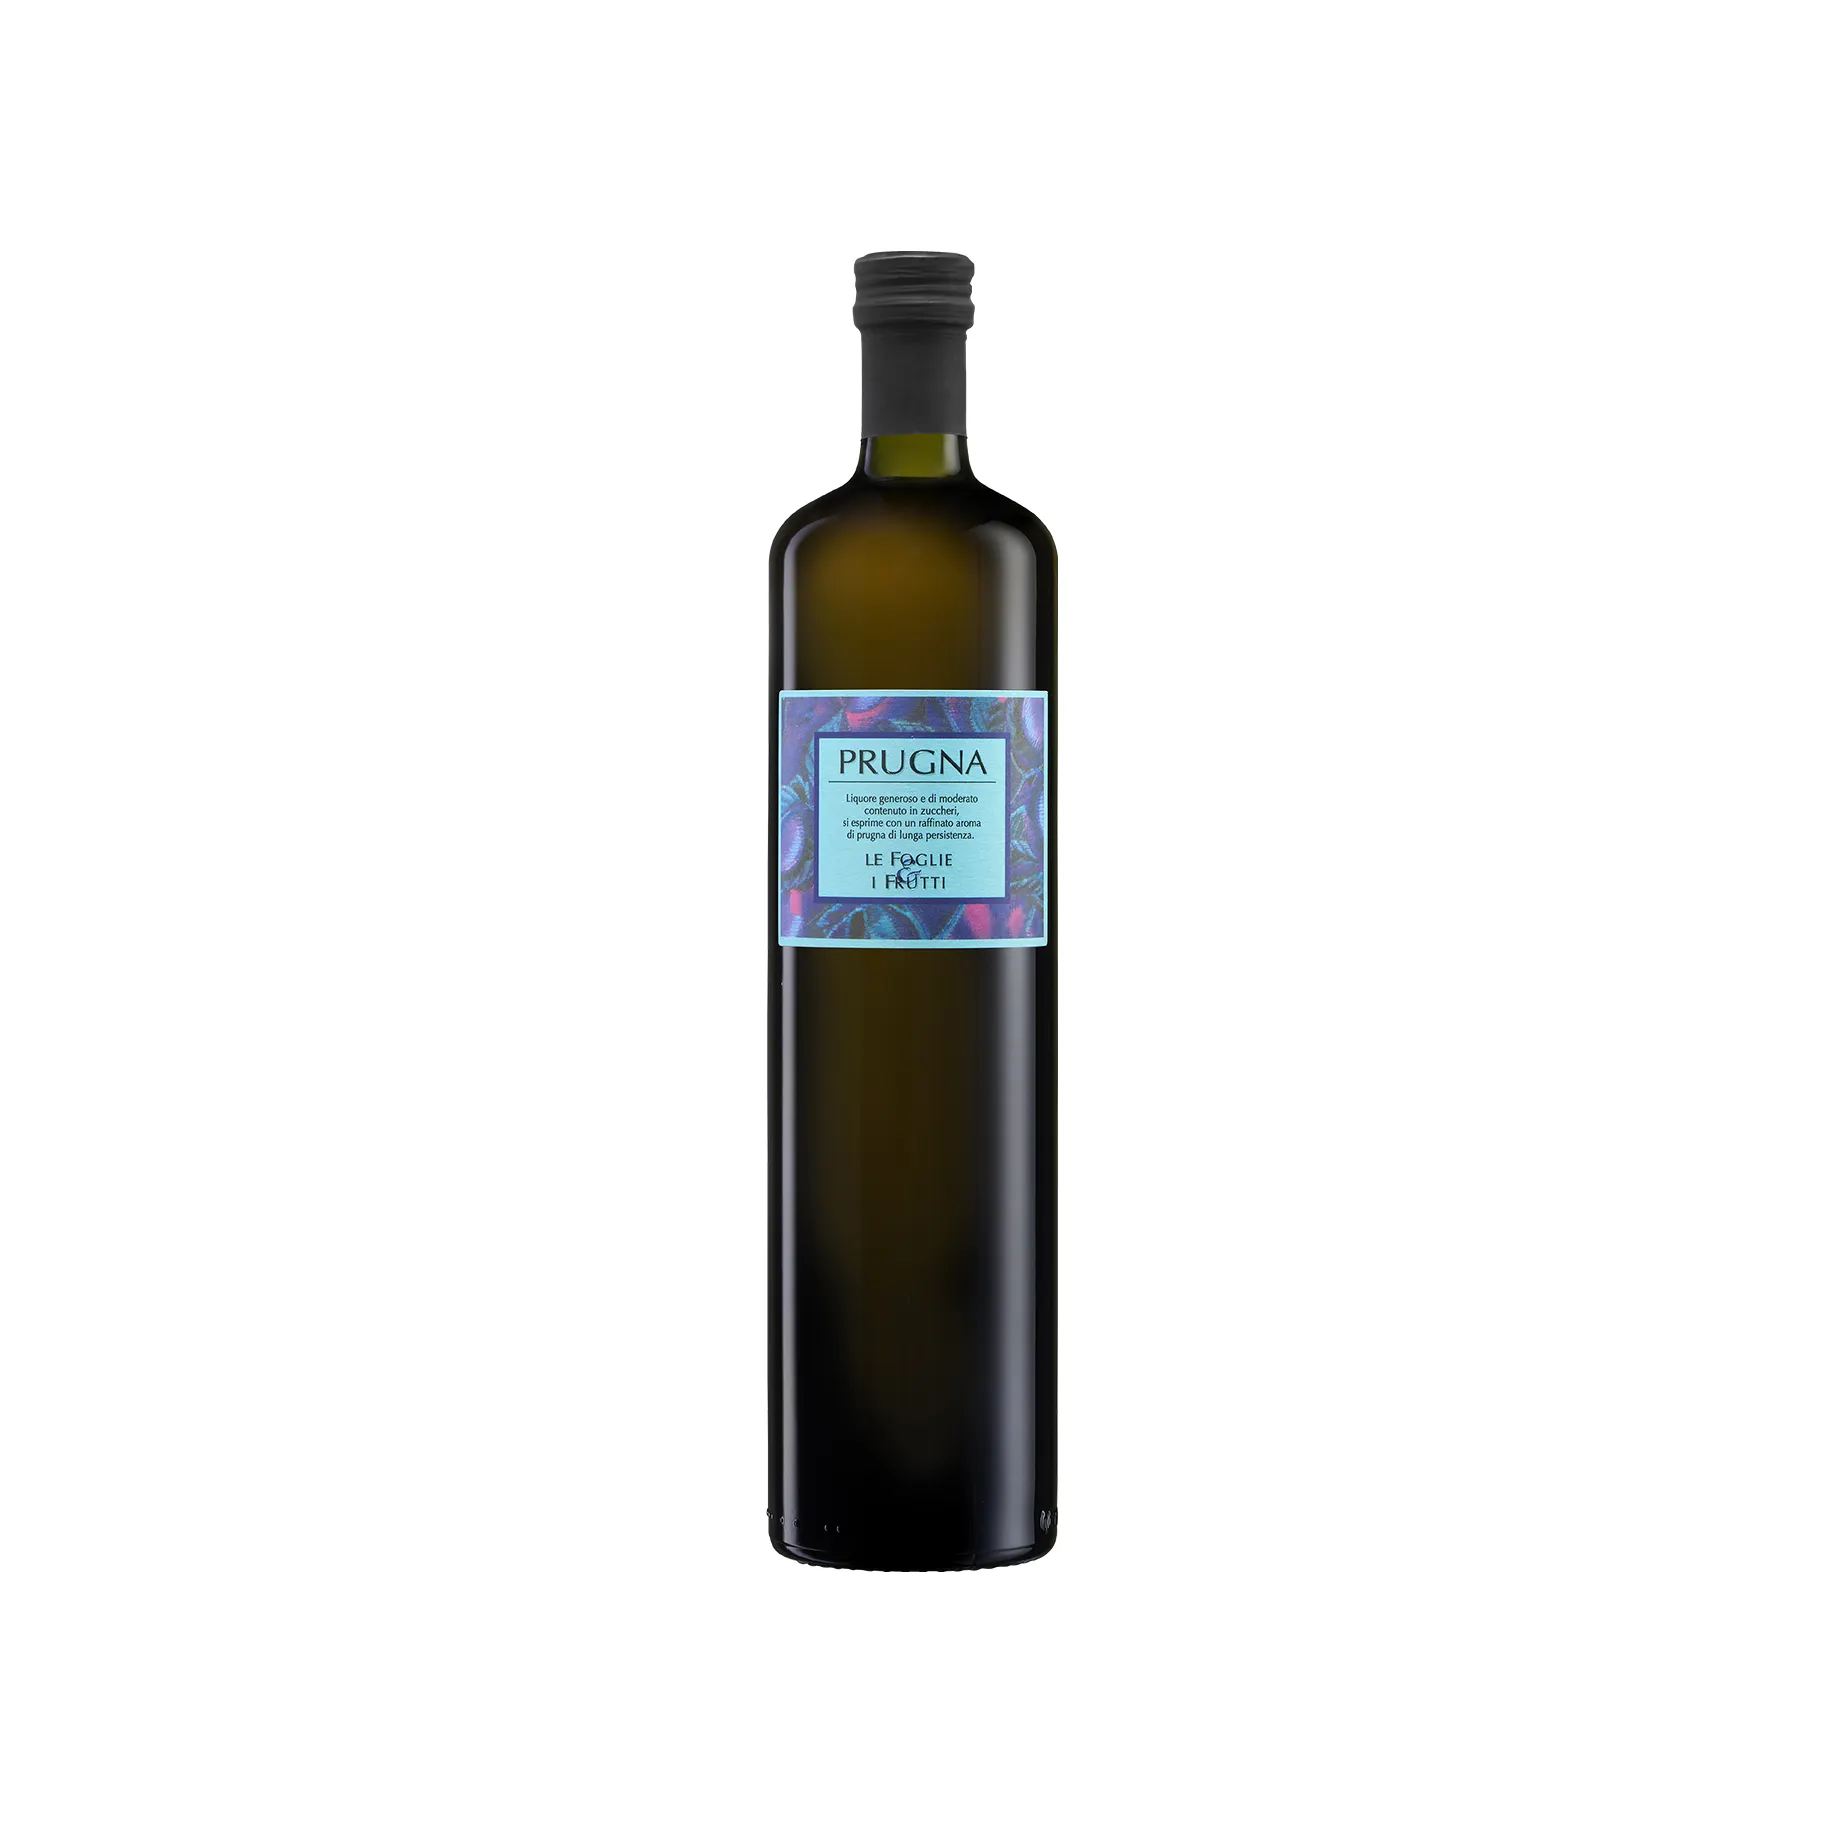 Liquore di prugne italiano di alta qualità "PRUGNA" 700ml di succo di PRUGNA genuino infuso IN alcool FINE